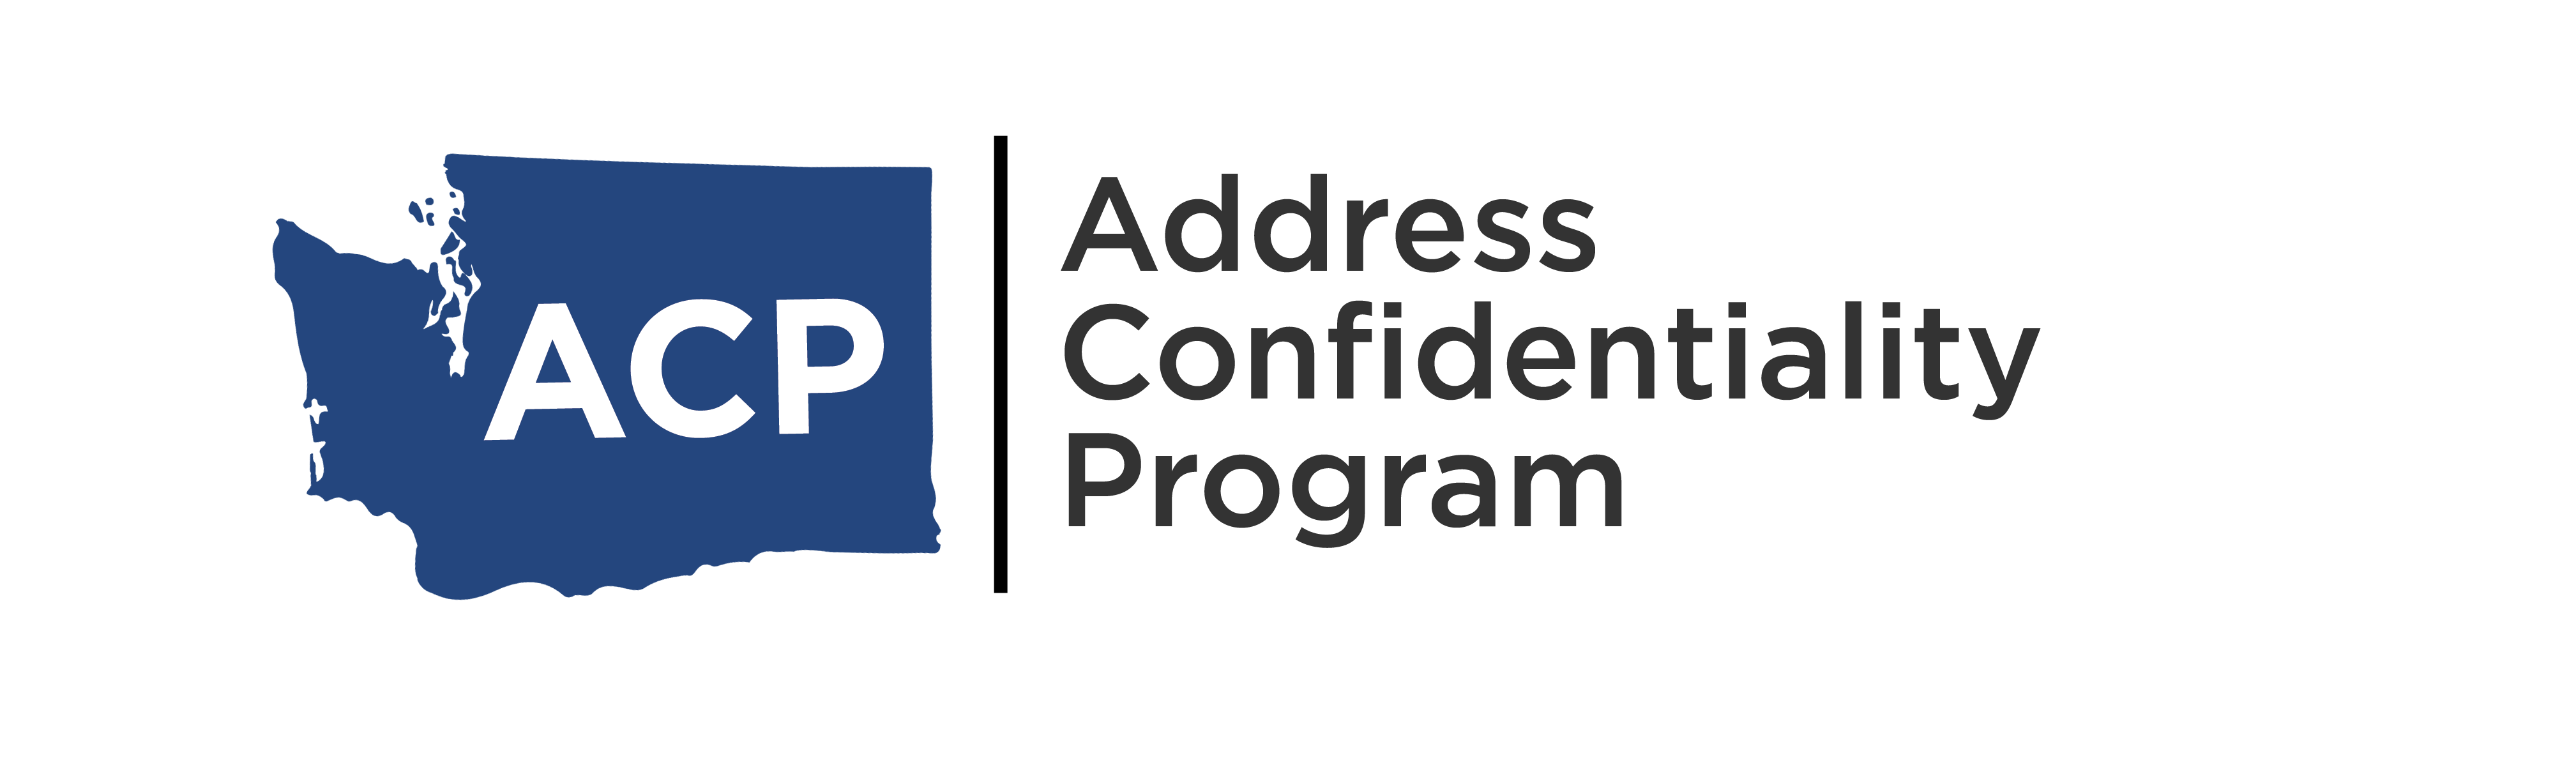 Address Confidentiality Program logo